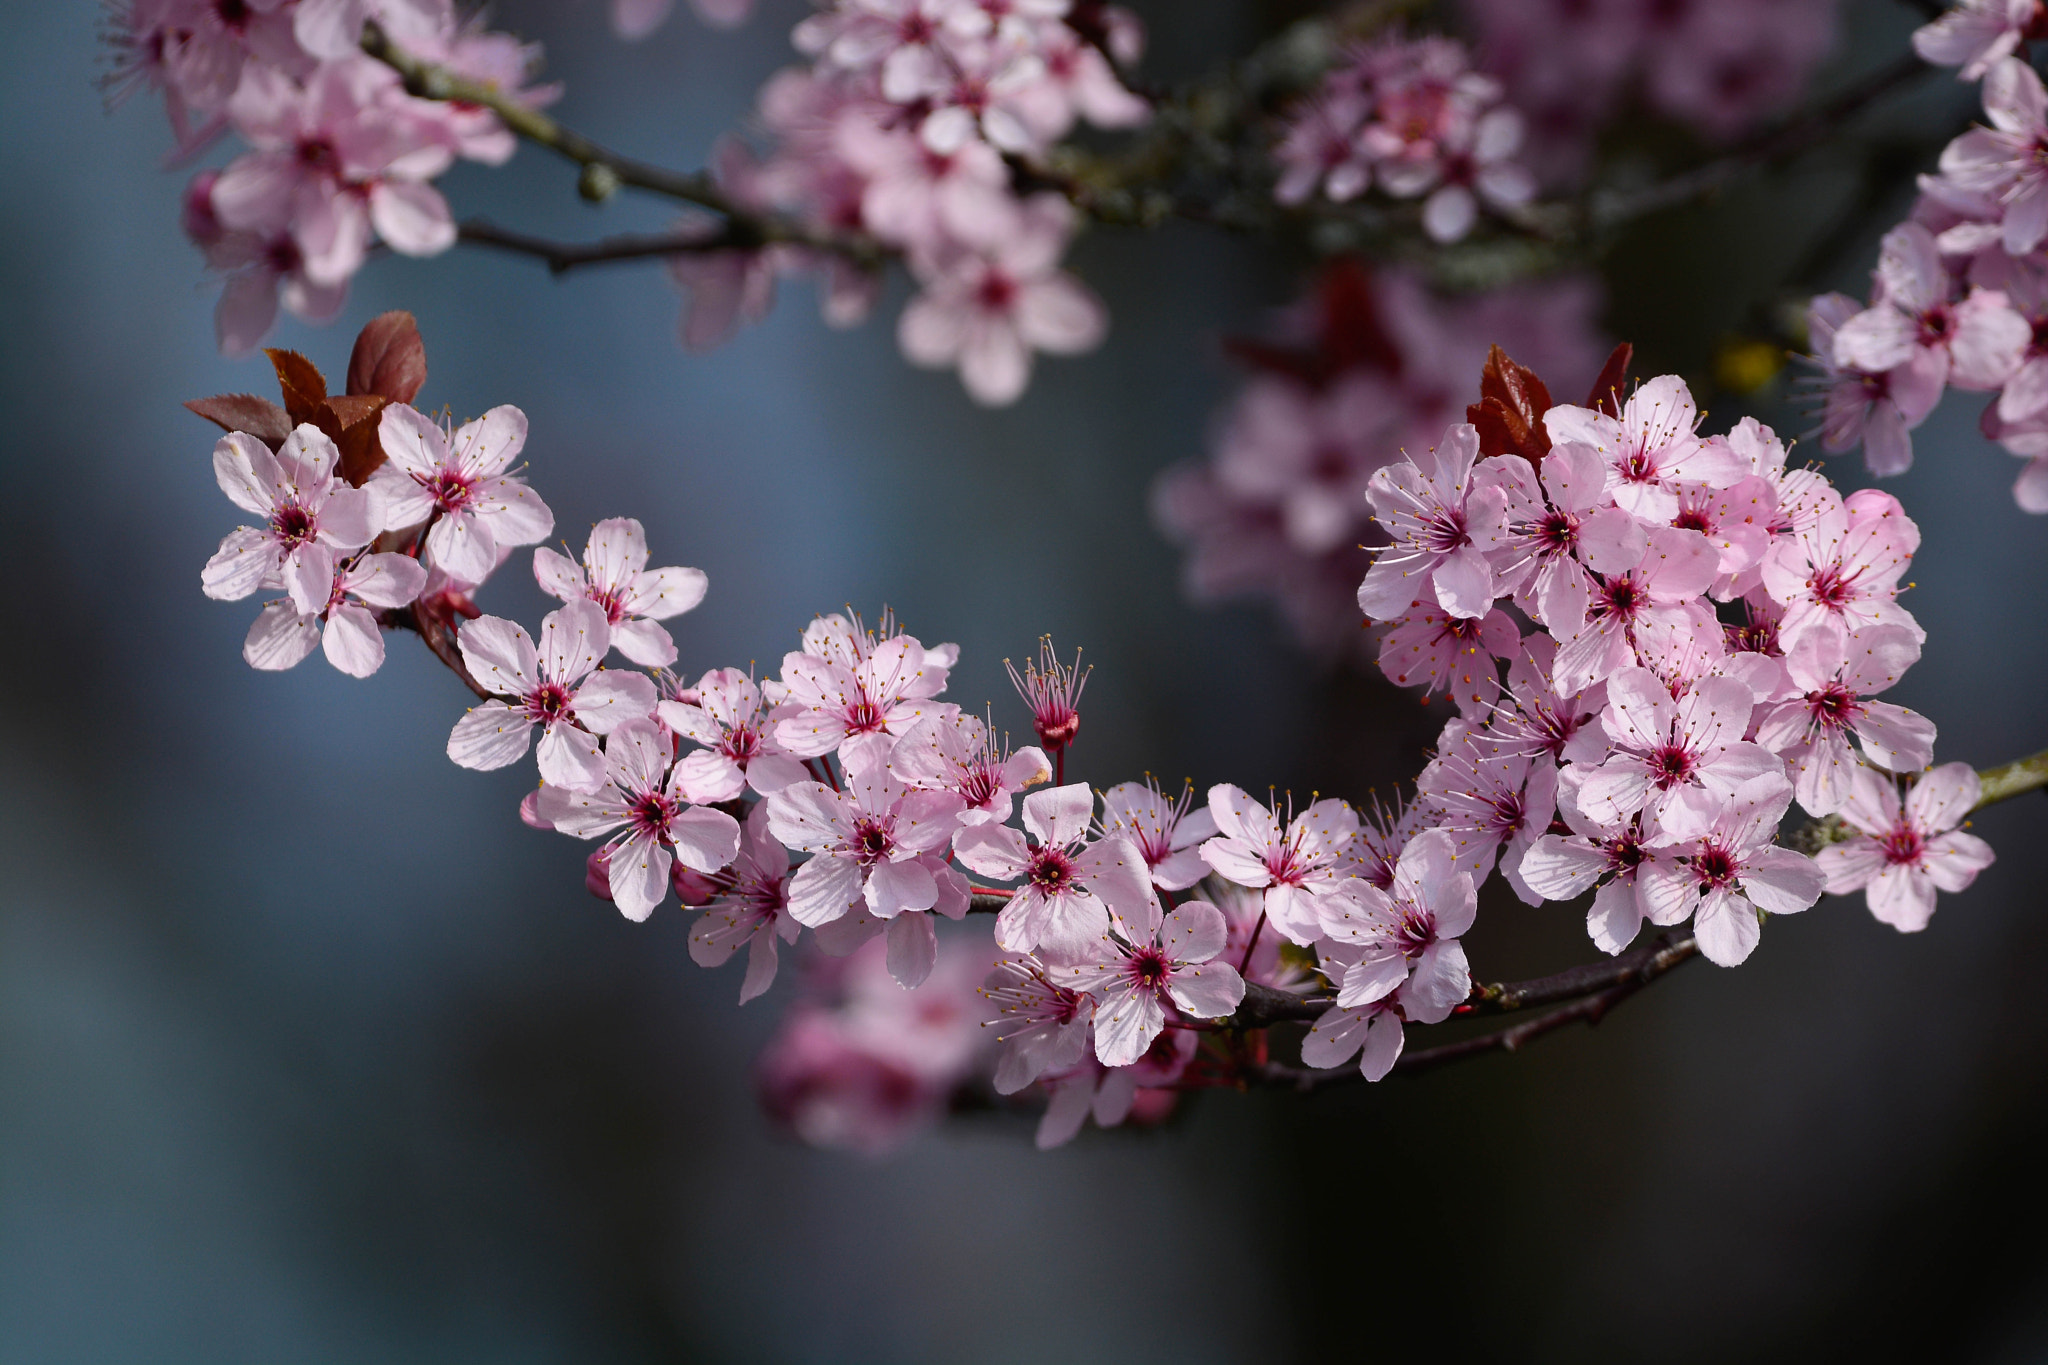 Nikon D7100 + Sigma 150-600mm F5-6.3 DG OS HSM | C sample photo. Spring blossoms photography